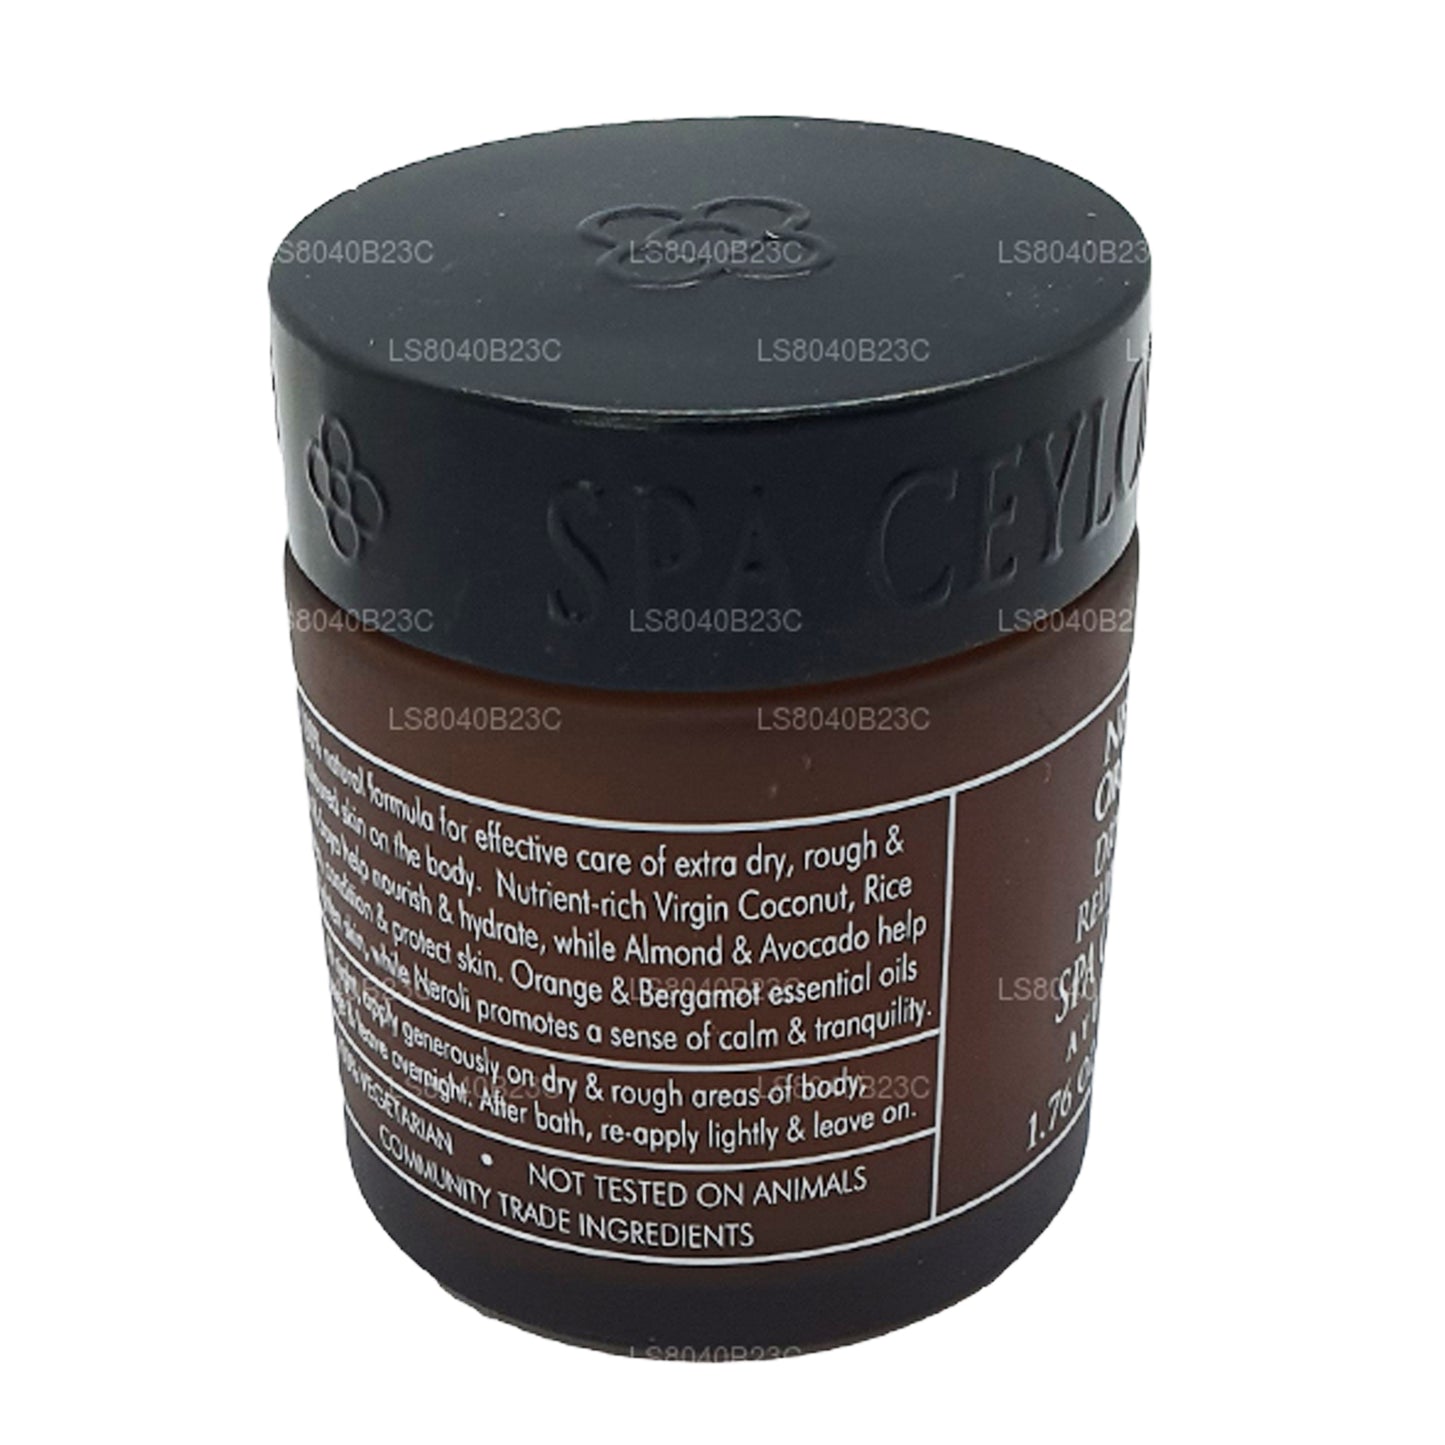 Spa Ceylon Neroli Orange Dry Skin Relief Balm (50g)